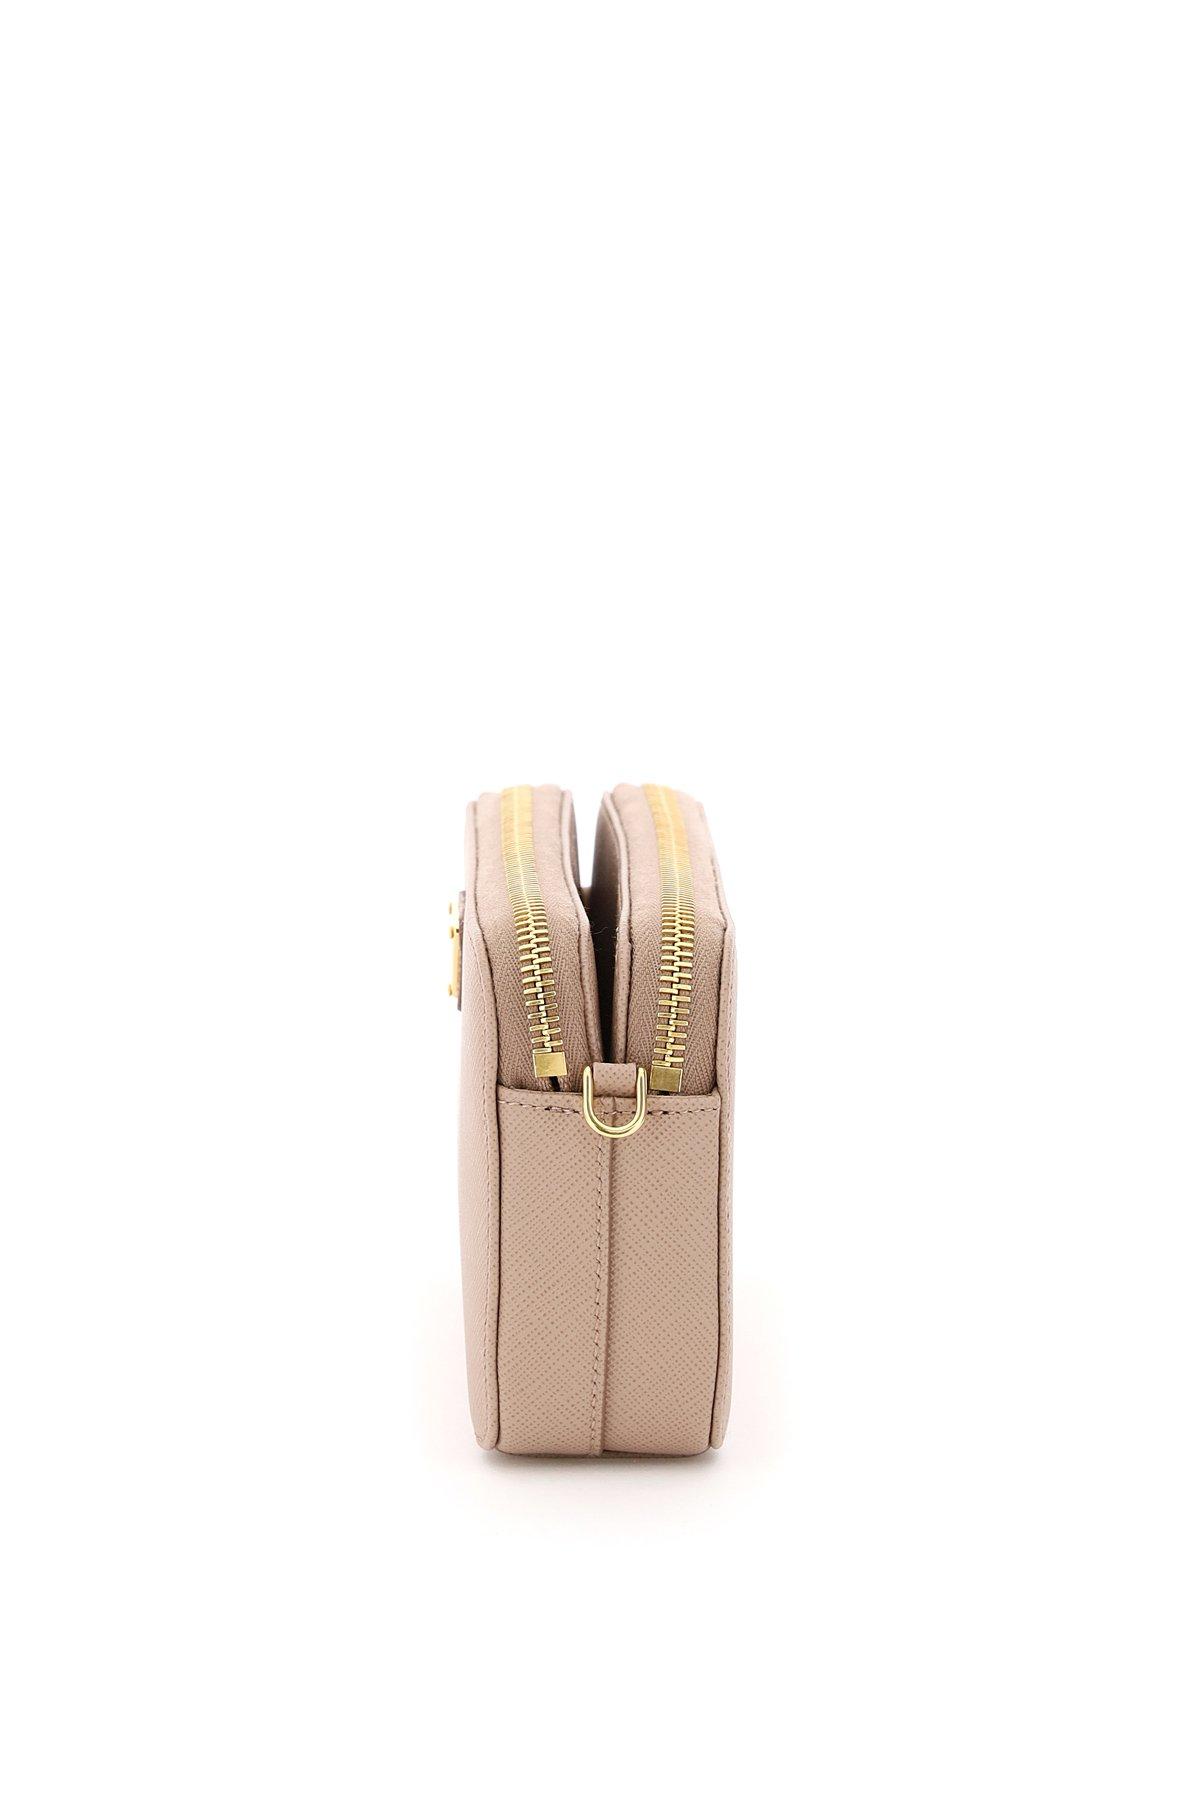 Prada Leather Double Zip Chain Mini Bag | Lyst